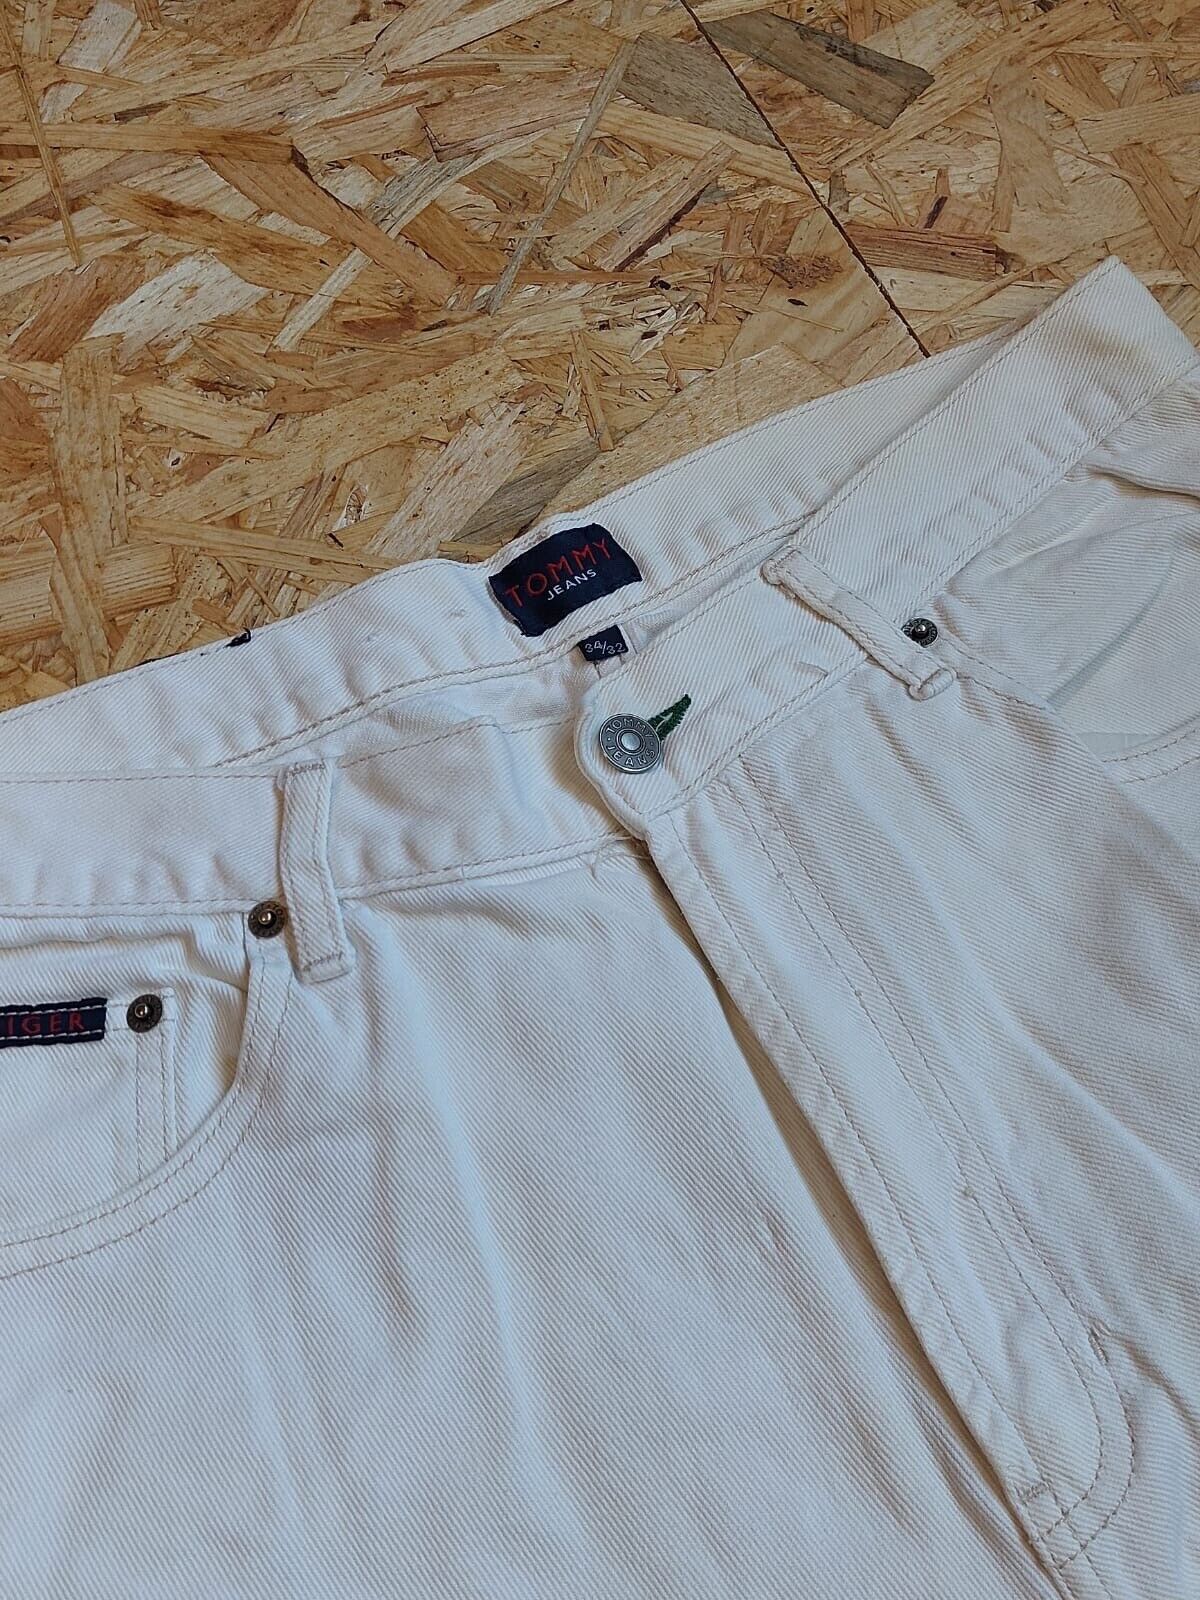 Tommy Jeans W34 L32 White Denim regular Straight